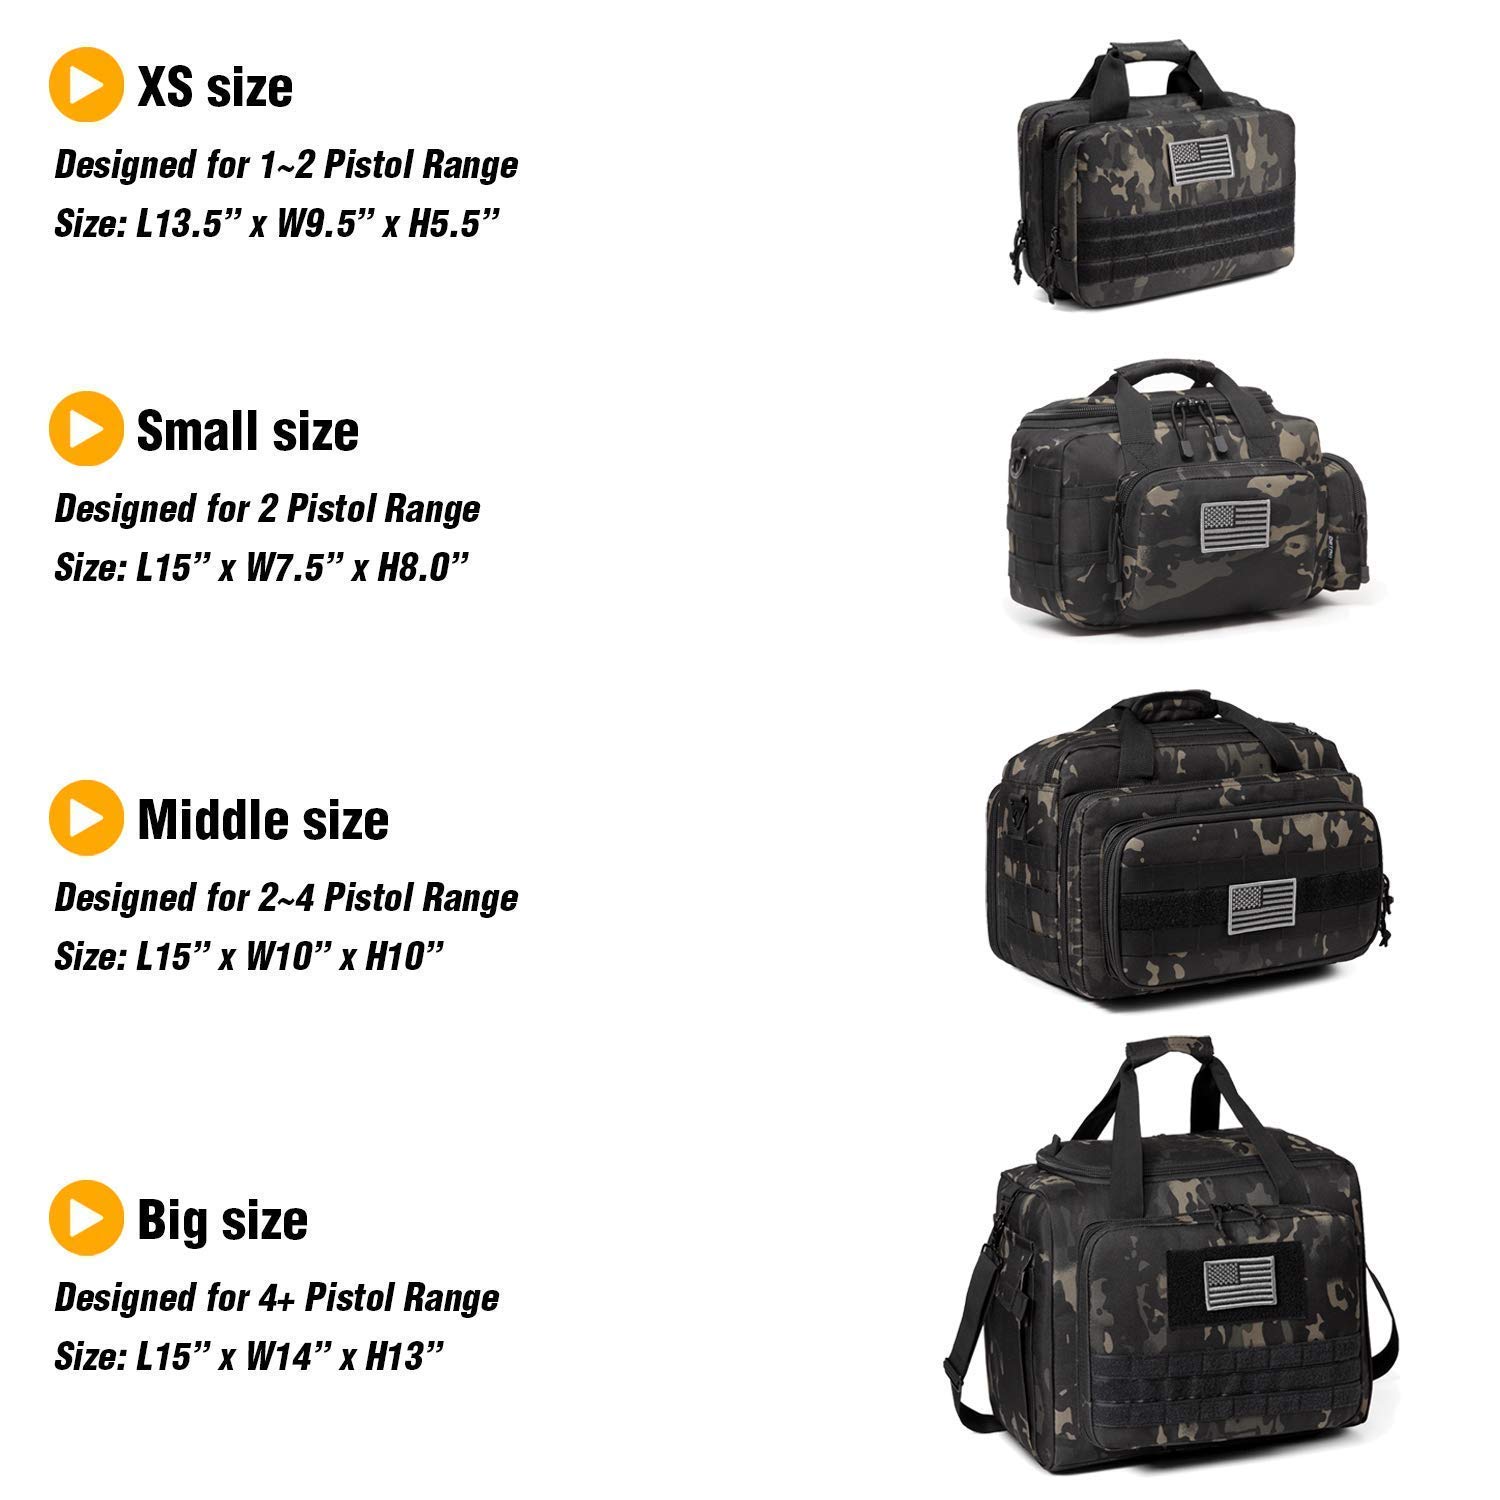 DBTAC Gun Range Bag Large | Tactical 4+ Pistol Shooting Range Duffle Bag for Handguns and Ammo with 2X Removable Hook & Loop Divider for DSLR | US Flag Patch + Universal Holster Included (Black Camo)